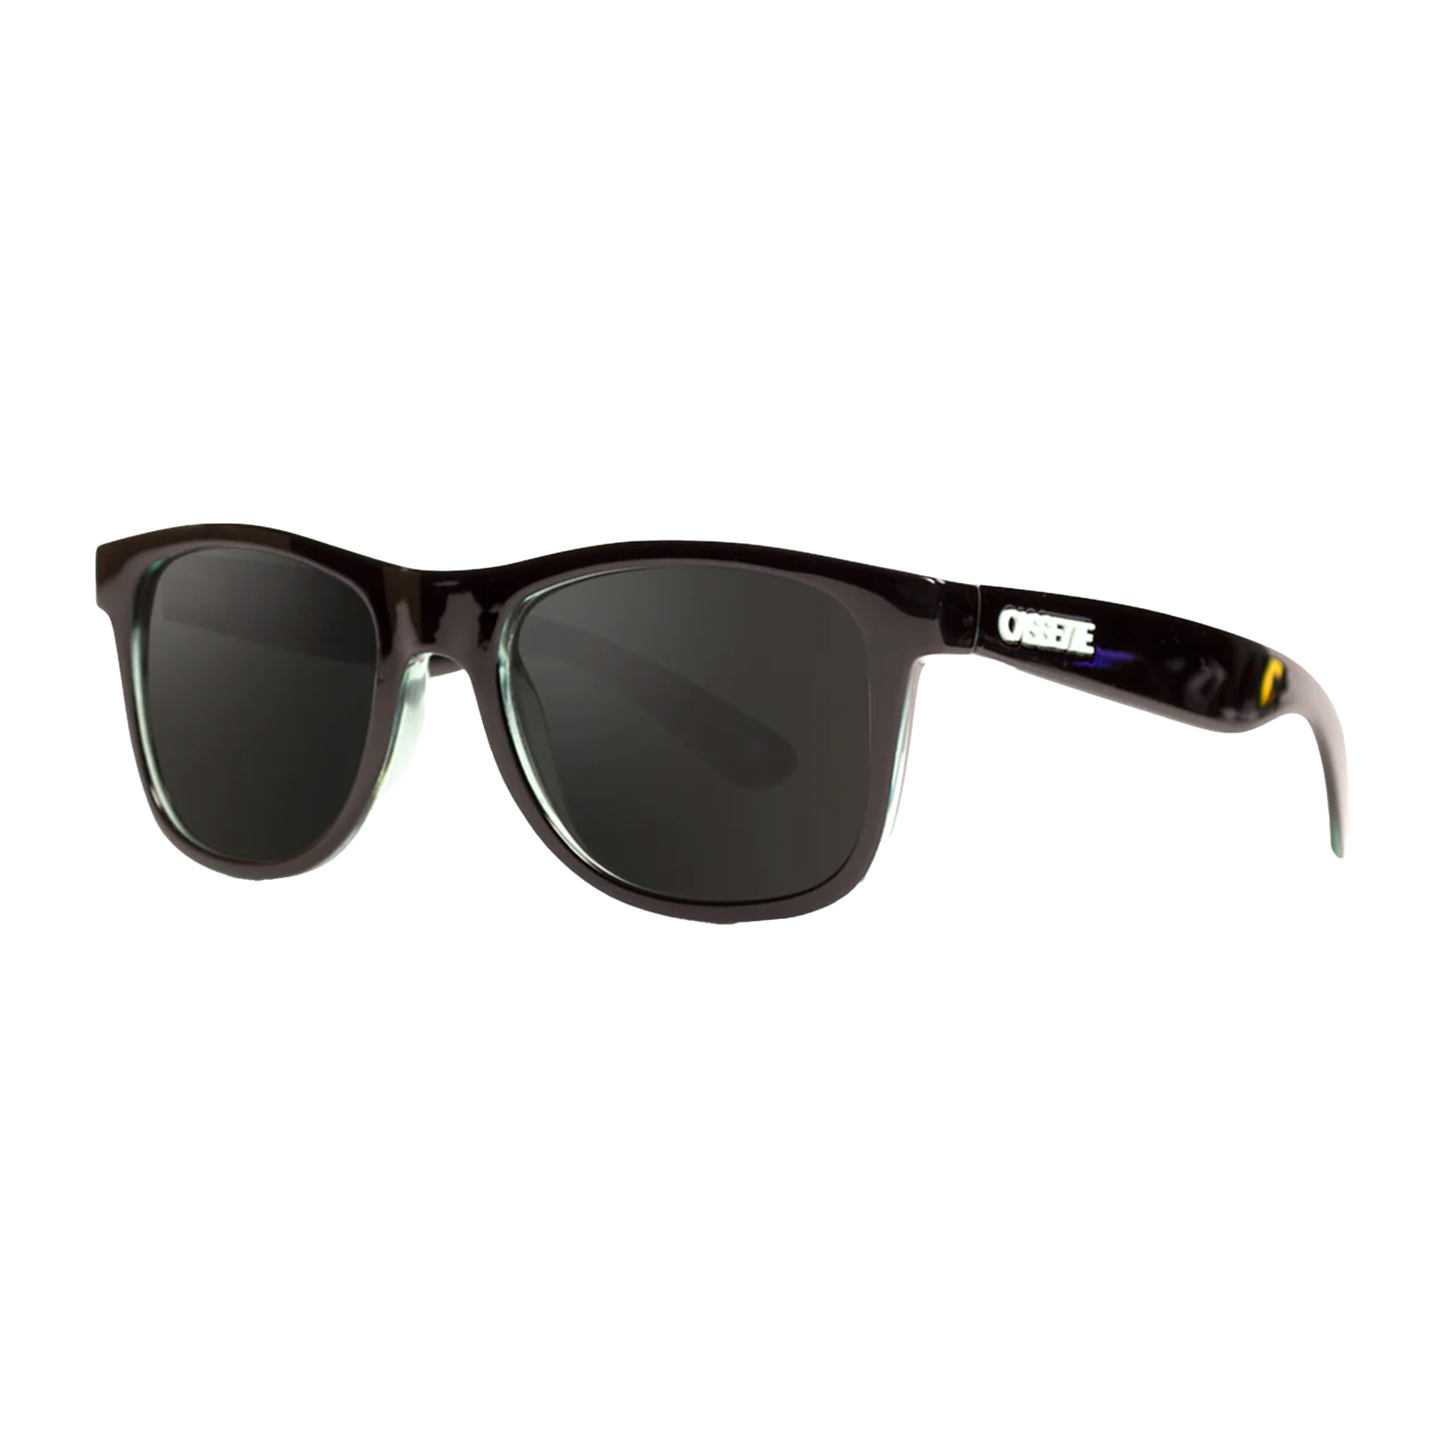 Cassette OGLX Sunglasses - Black and Seafoam / Smoke Lens